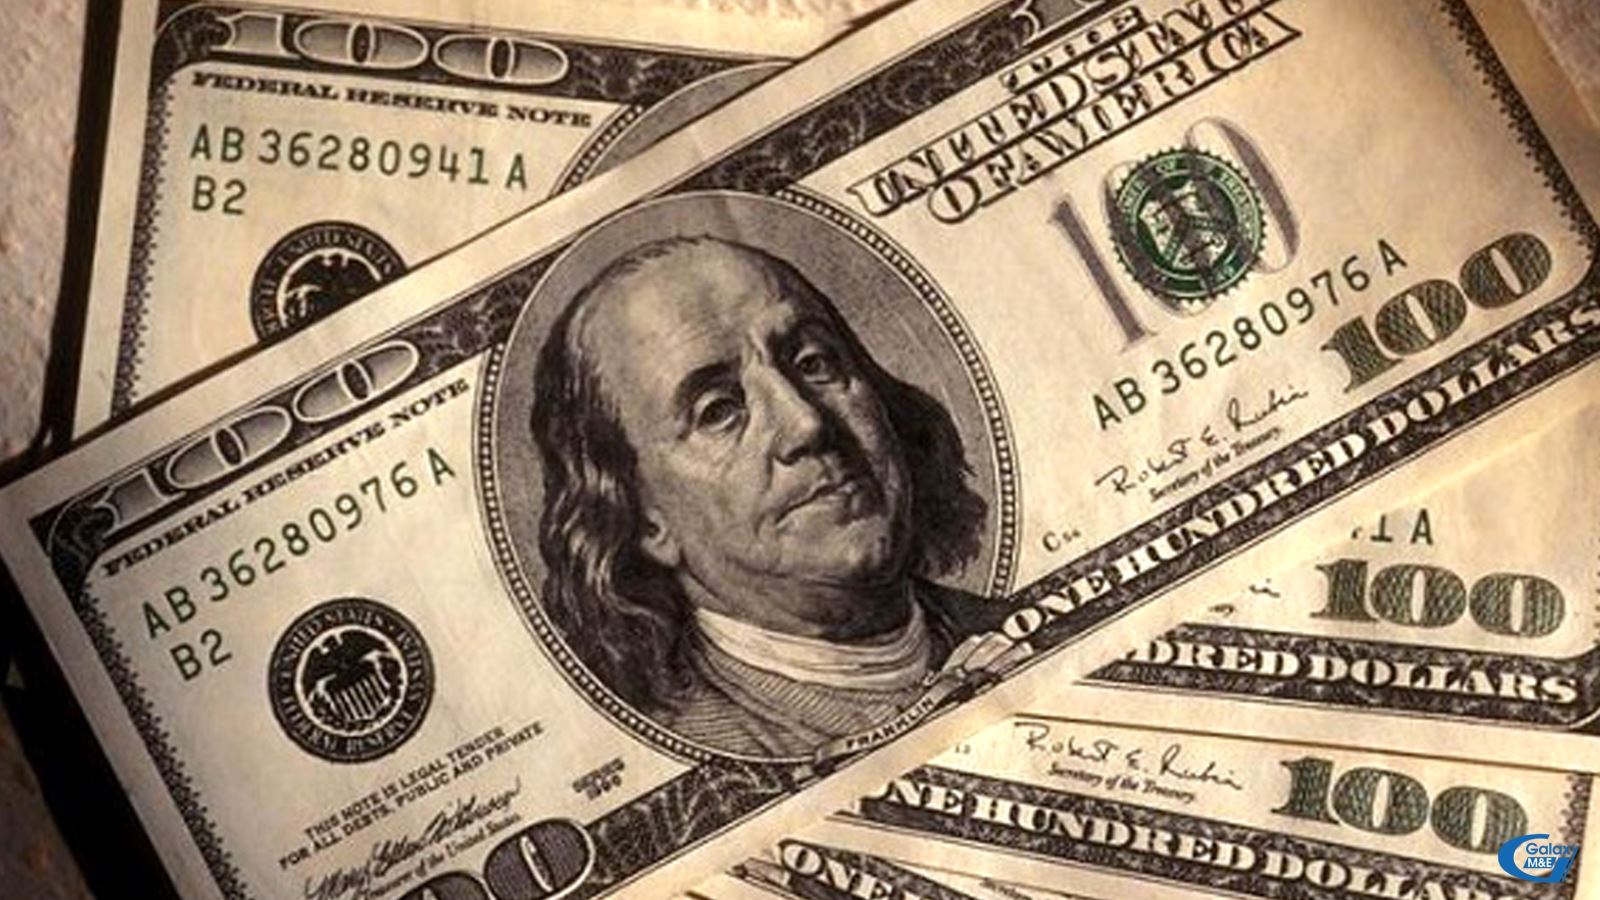 Benjamin Franklins face is on all 100 USD bills.